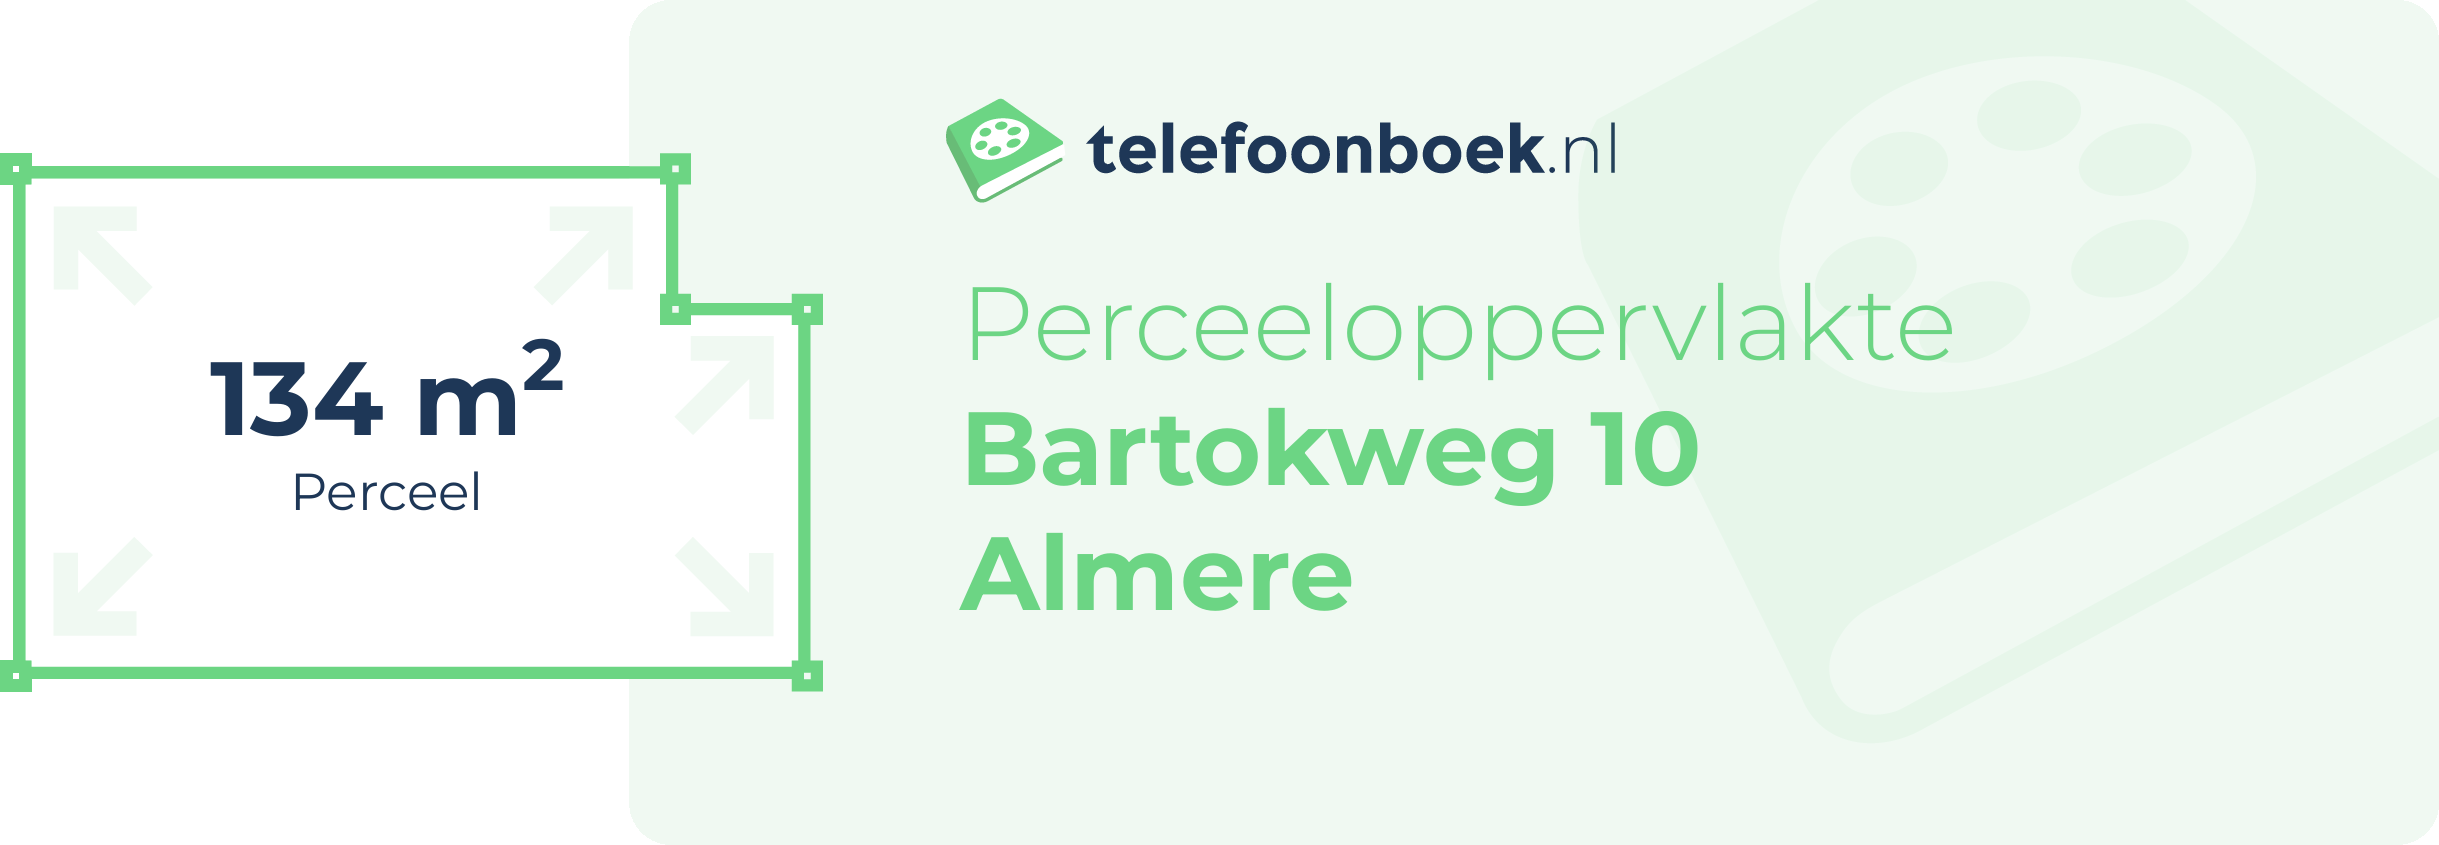 Perceeloppervlakte Bartokweg 10 Almere